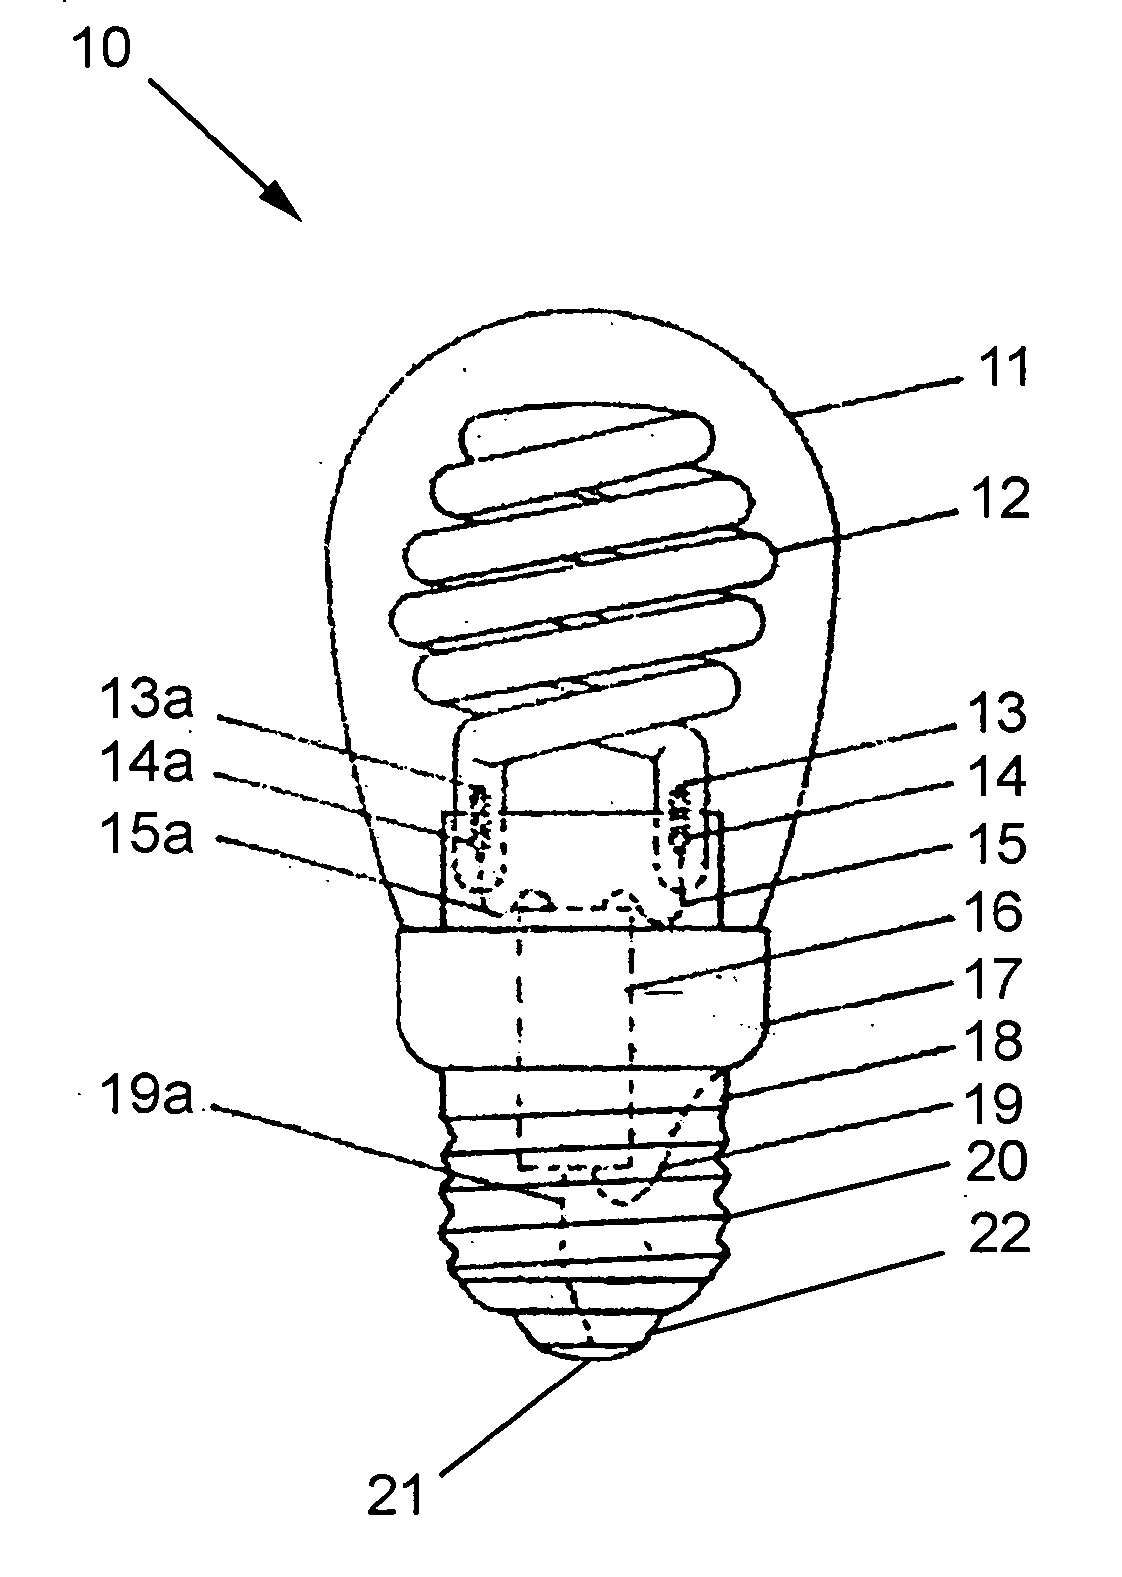 Spiral cold cathode fluorescent lamp